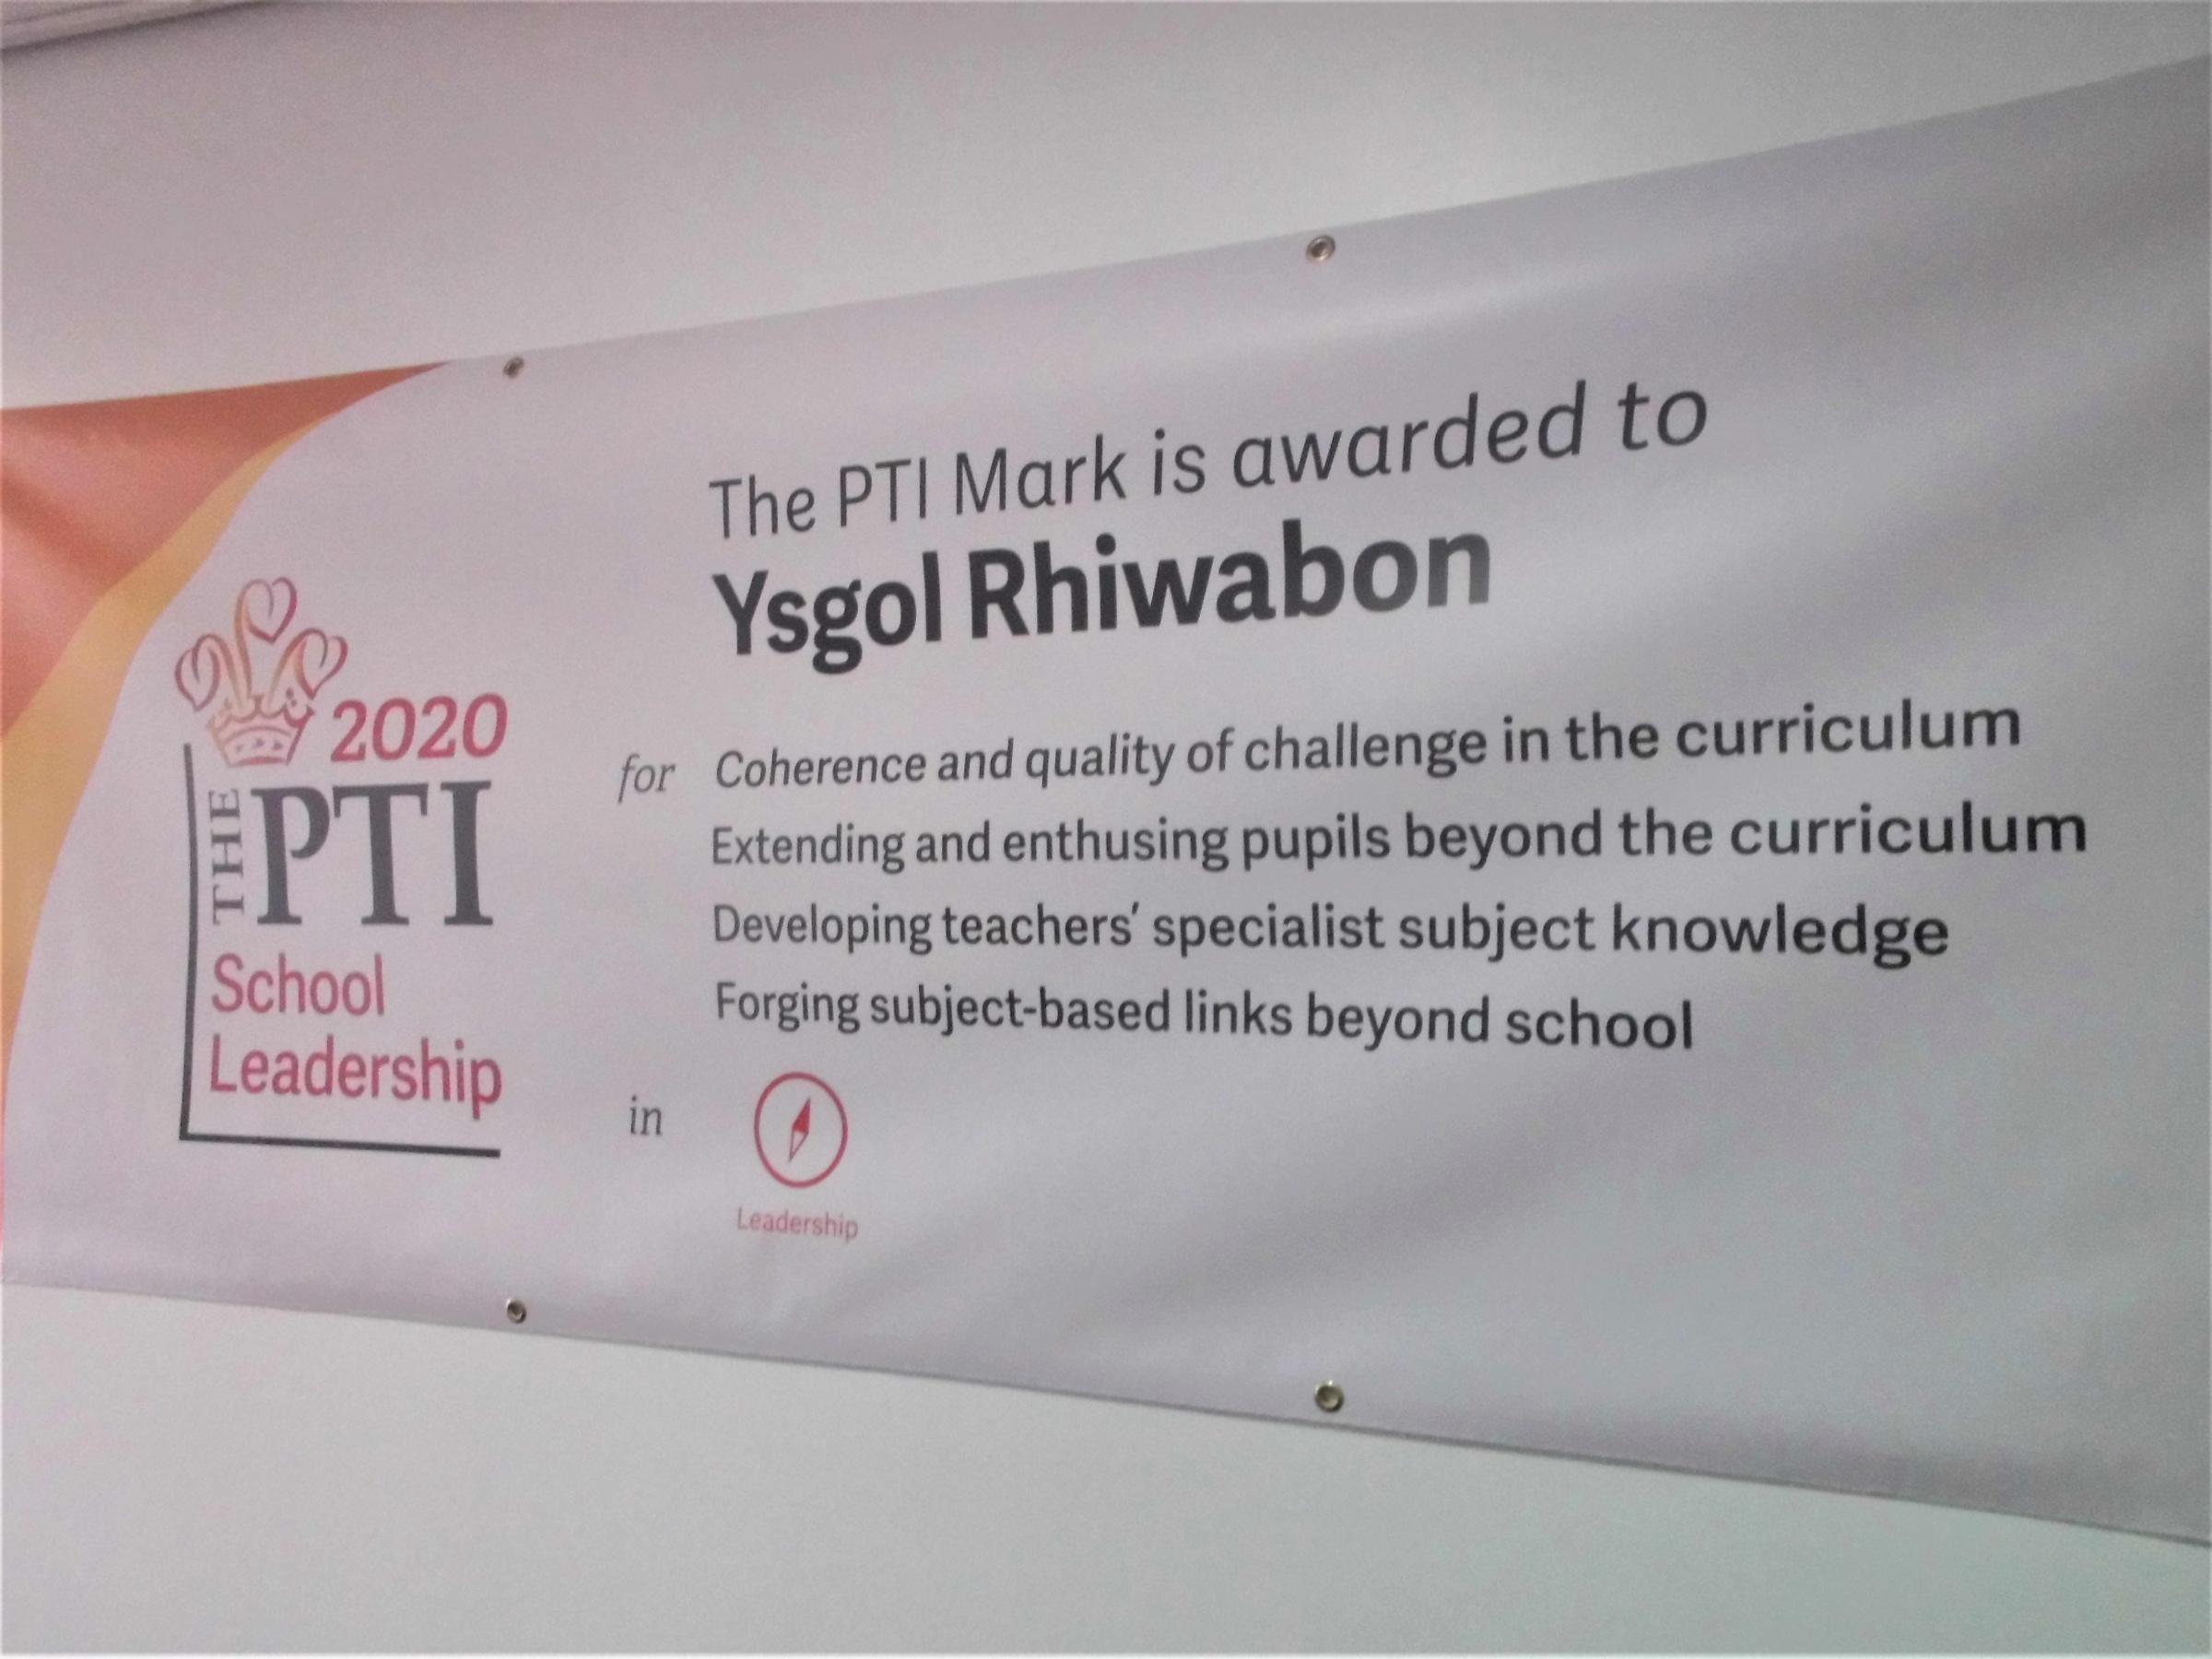 The Princes Teaching Institute Mark banner at Ysgol Rhiwabon.